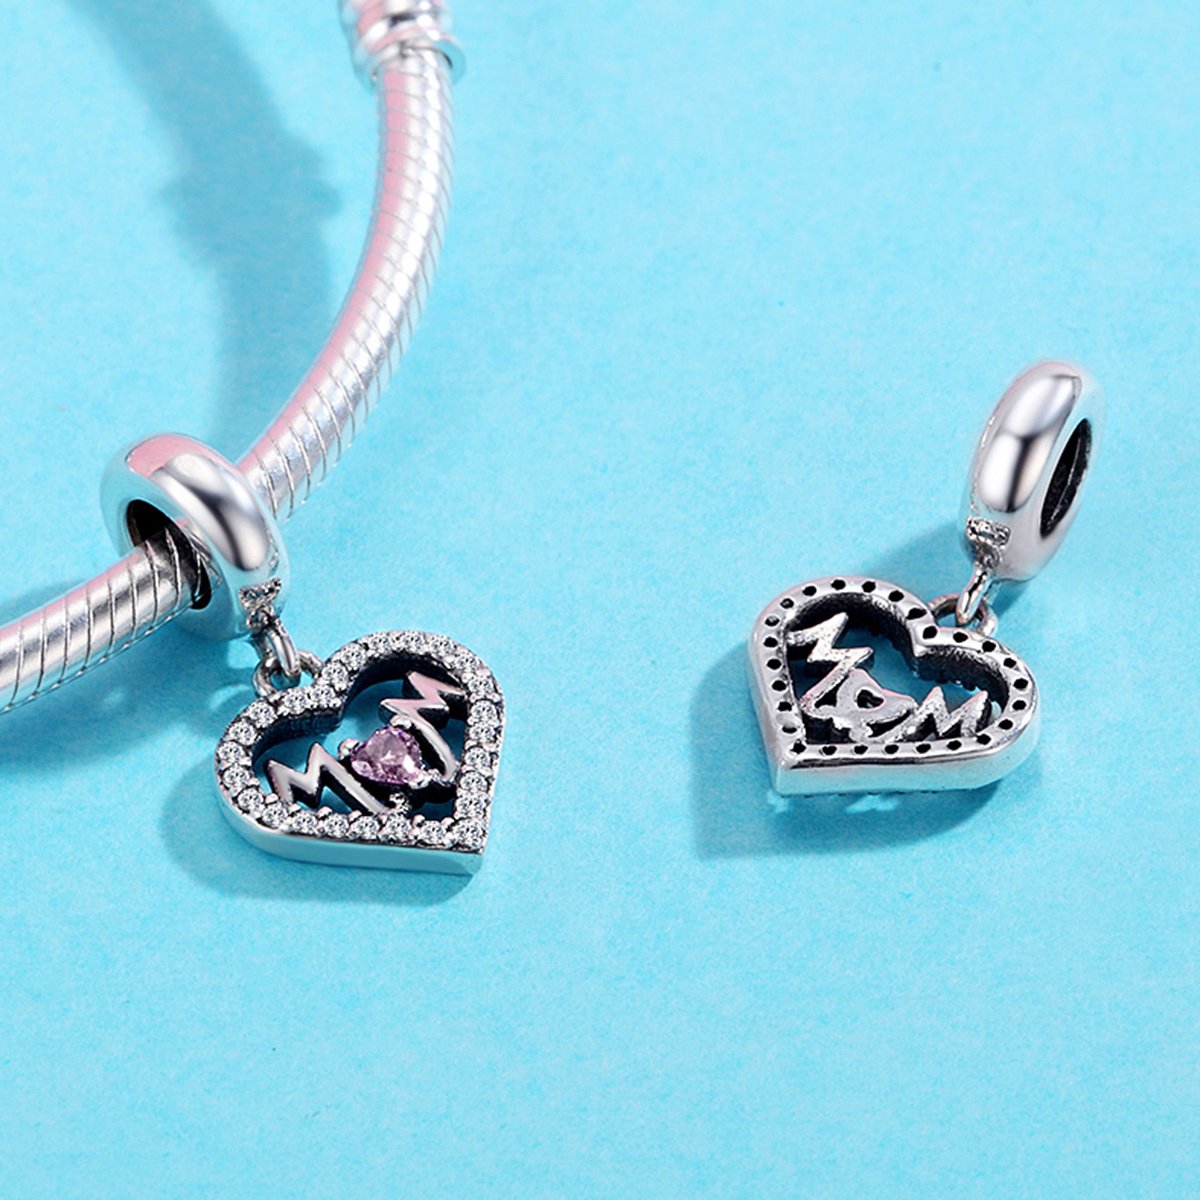 Sterling 925 silver charm the double M bead pendant fits Pandora charm and European charm bracelet Xaxe.com